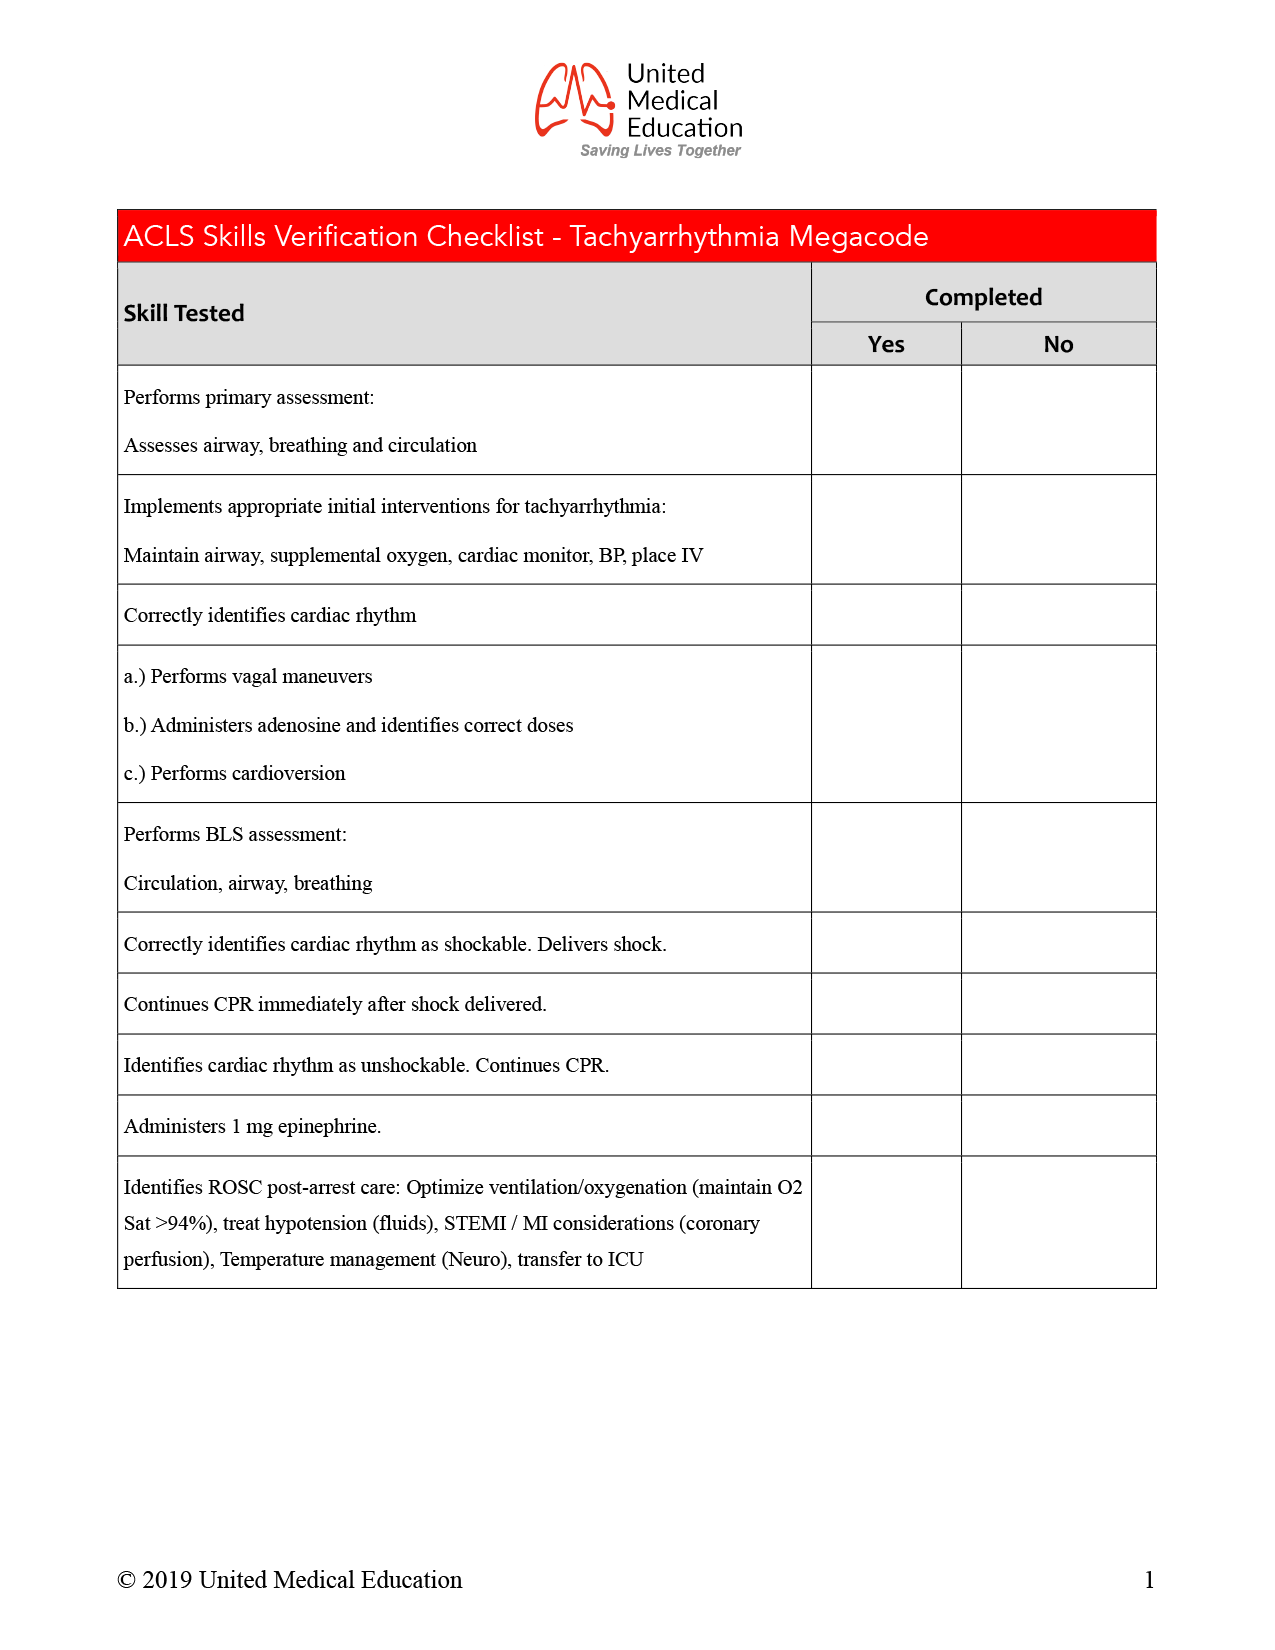 ACLS Skills Session Checklist Tachyarrhythmia Megacode